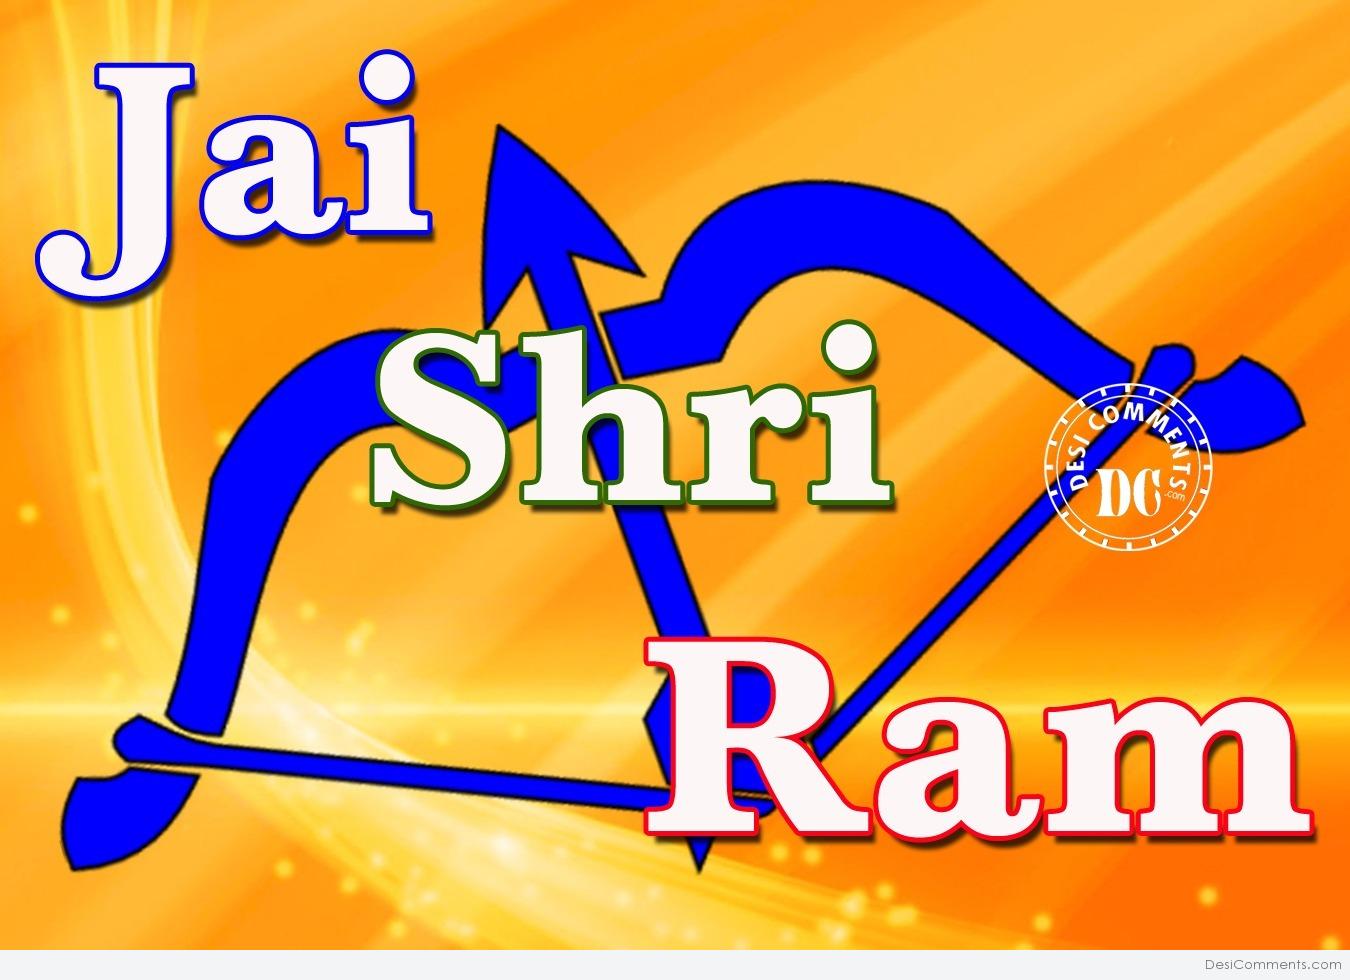 Jai Shri Ram - DesiComments.com